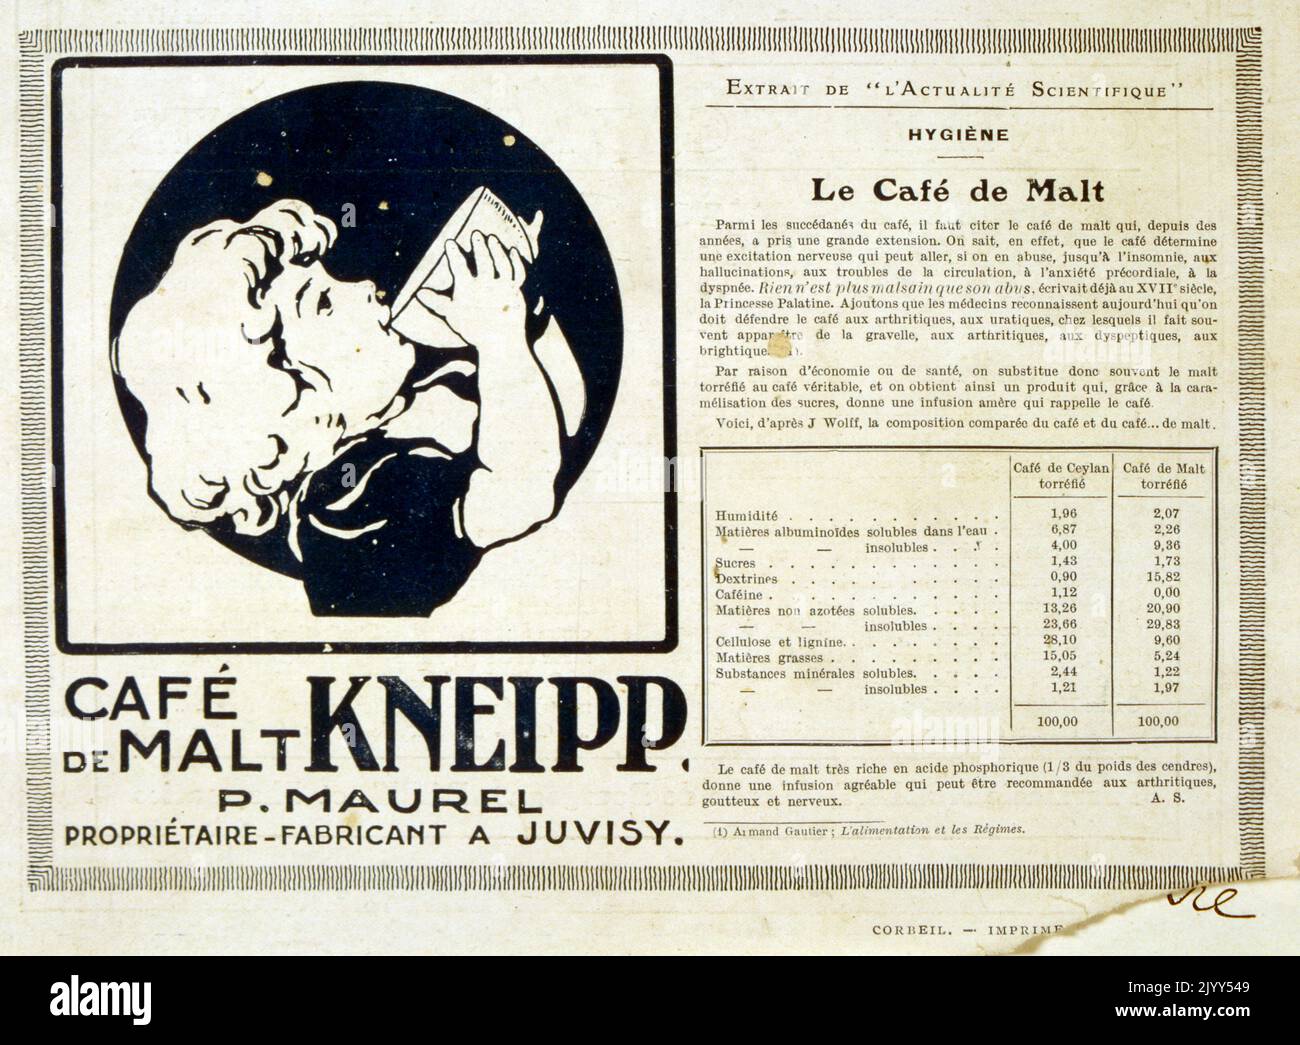 Annuncio pubblicitario francese per la bevanda al malto Kneipp 1900 Foto Stock